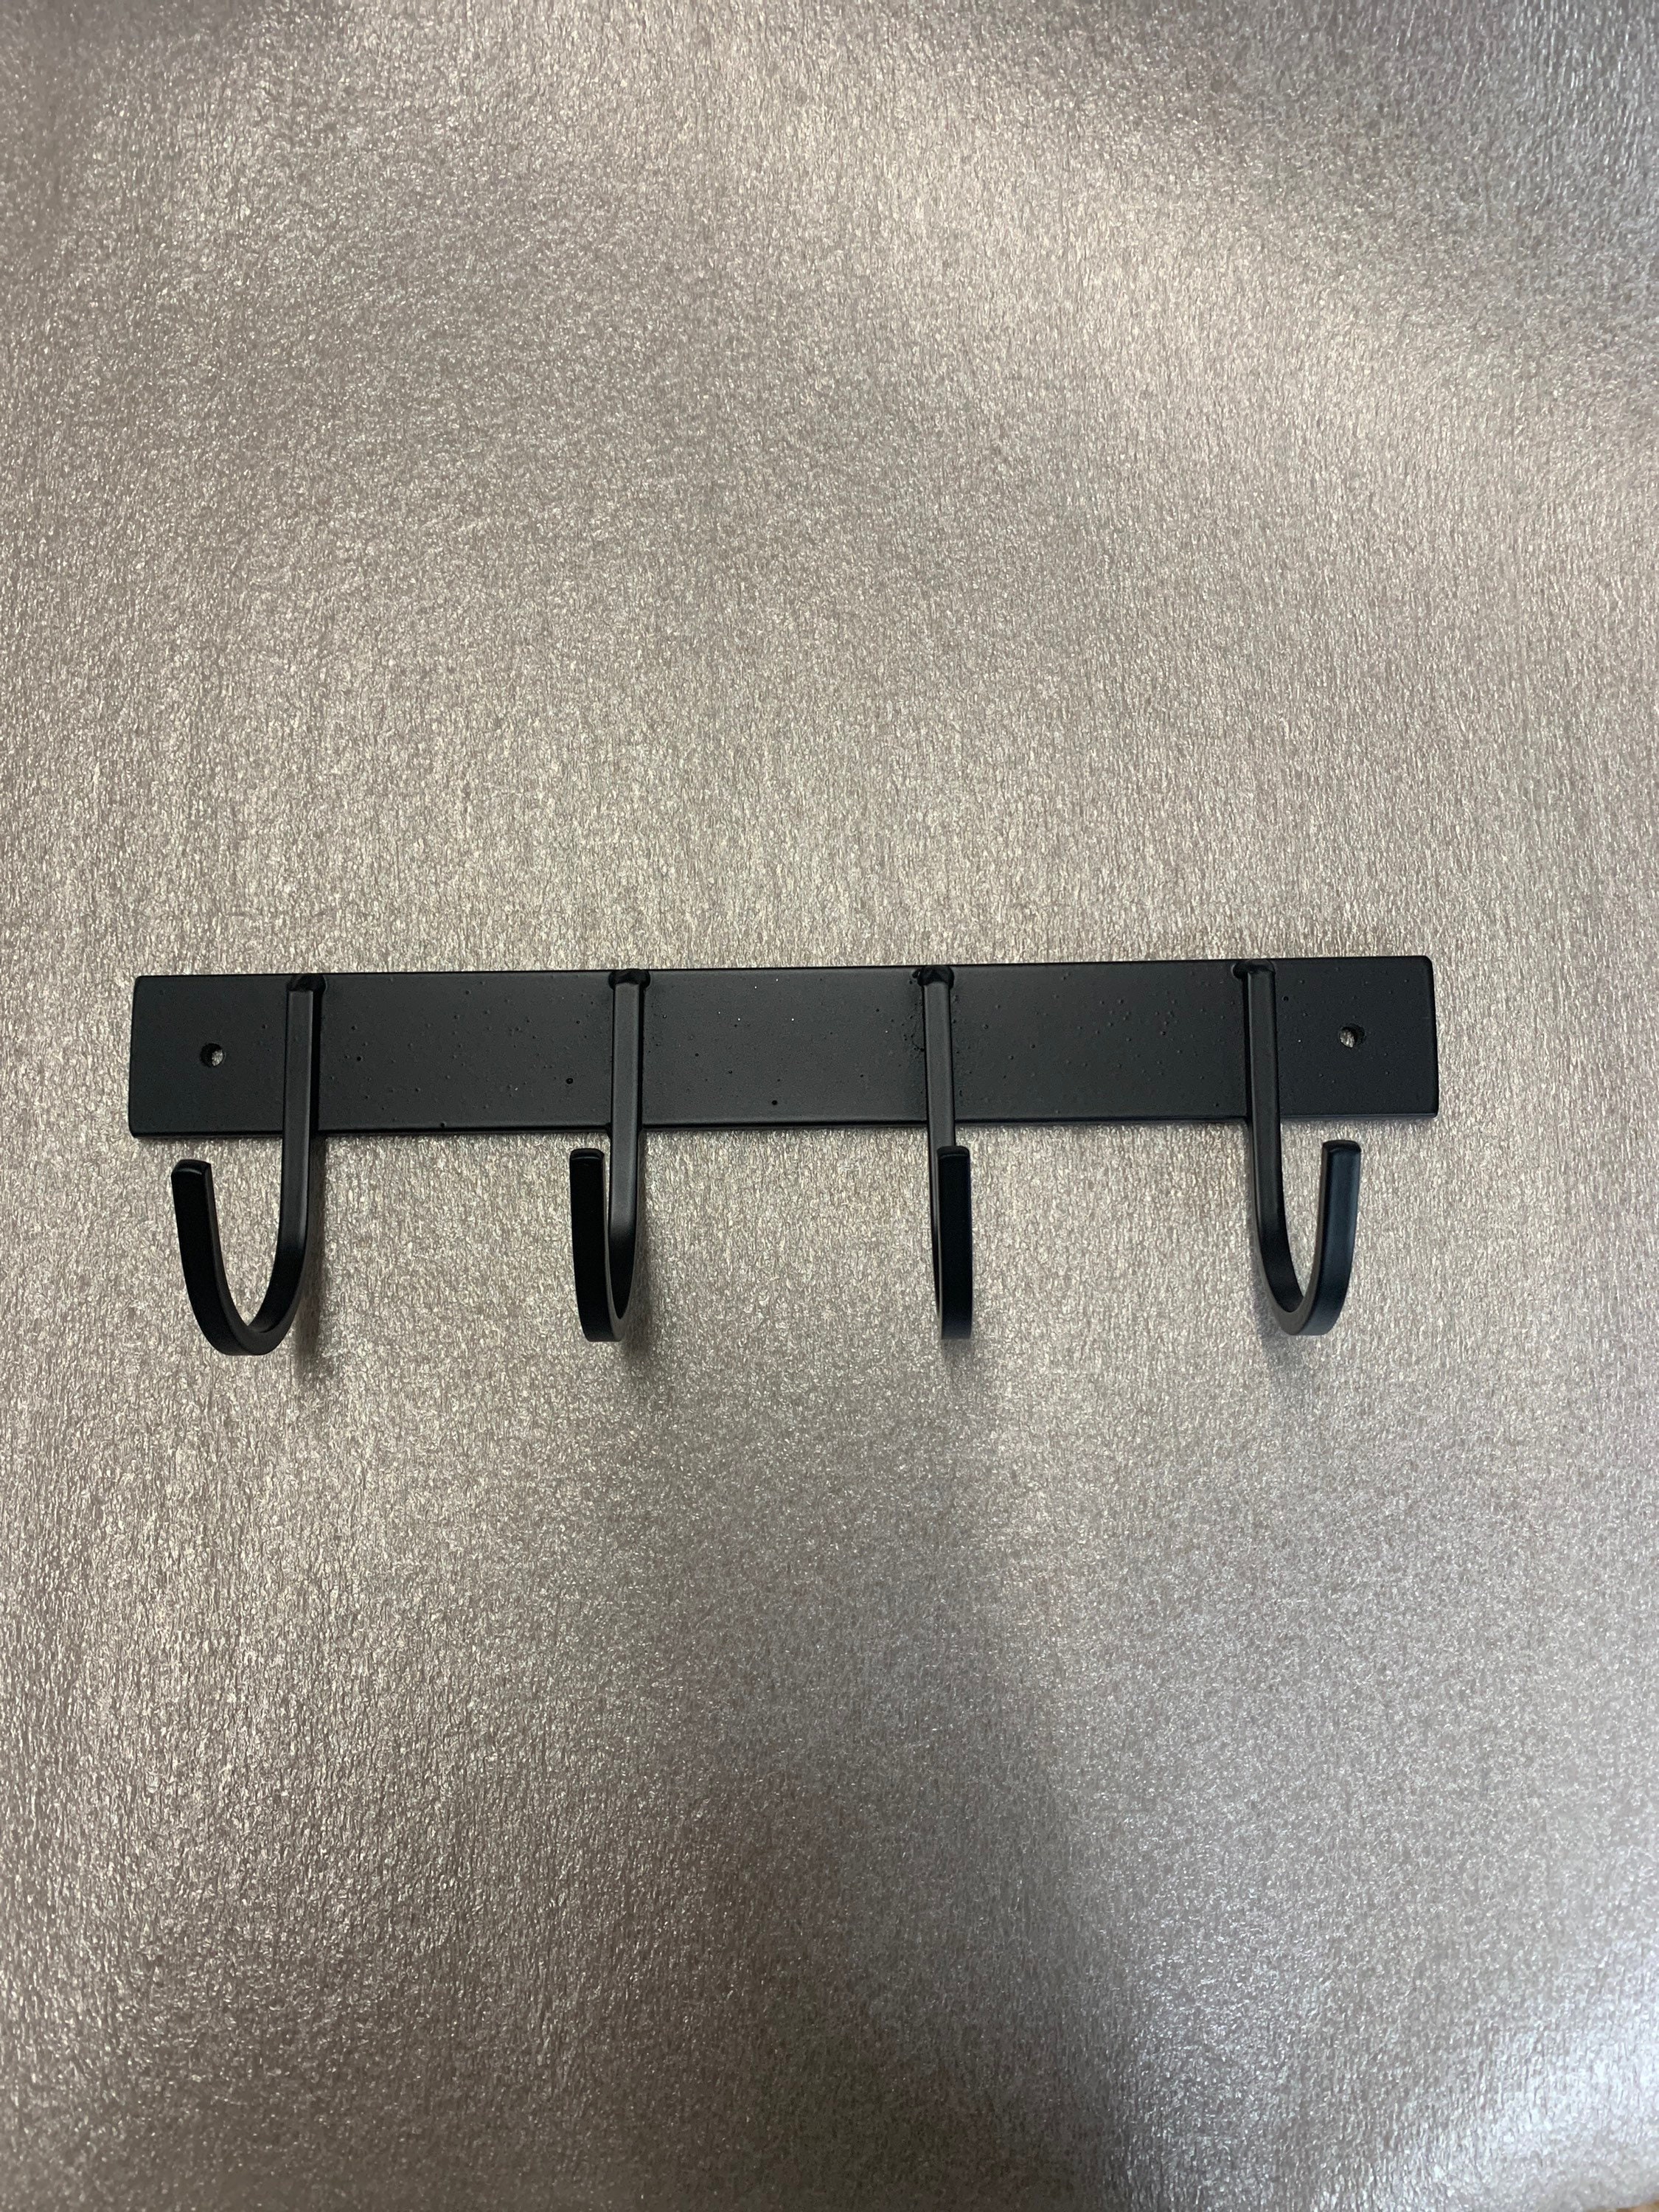 Small Hooks for Keys, Small Decorative Key Rack, Key Holder, Rack